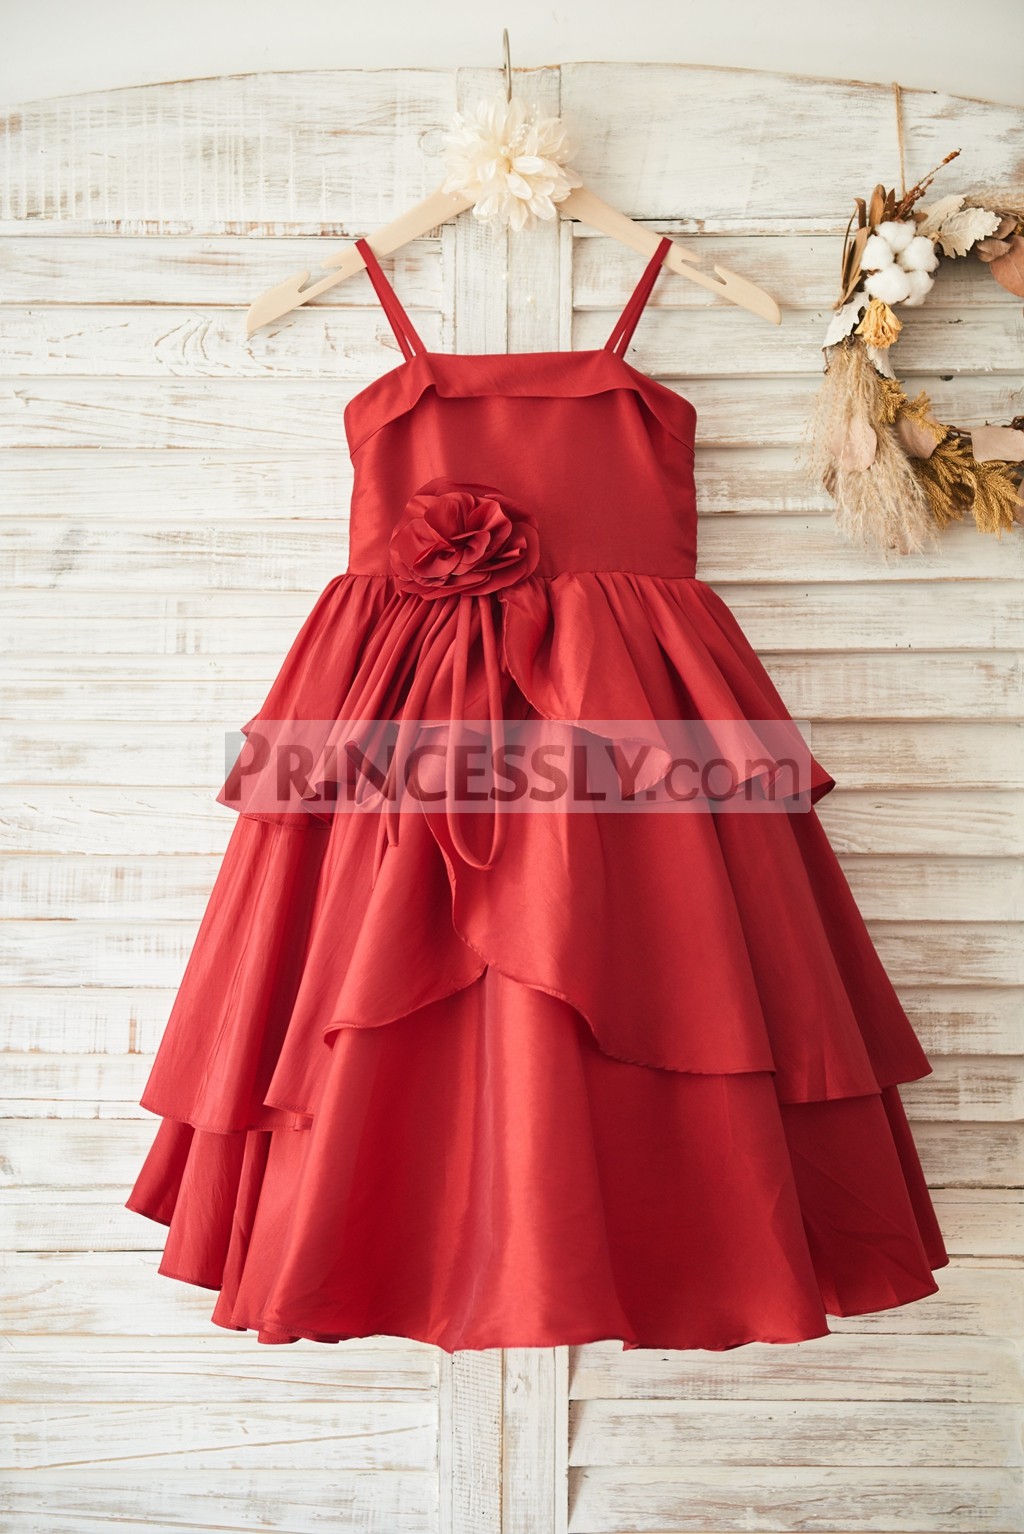 Princessly.com-K1003498-Red Taffeta Cupcake Wedding Flower Girl Dress with Spaghetti Straps/Bow-31